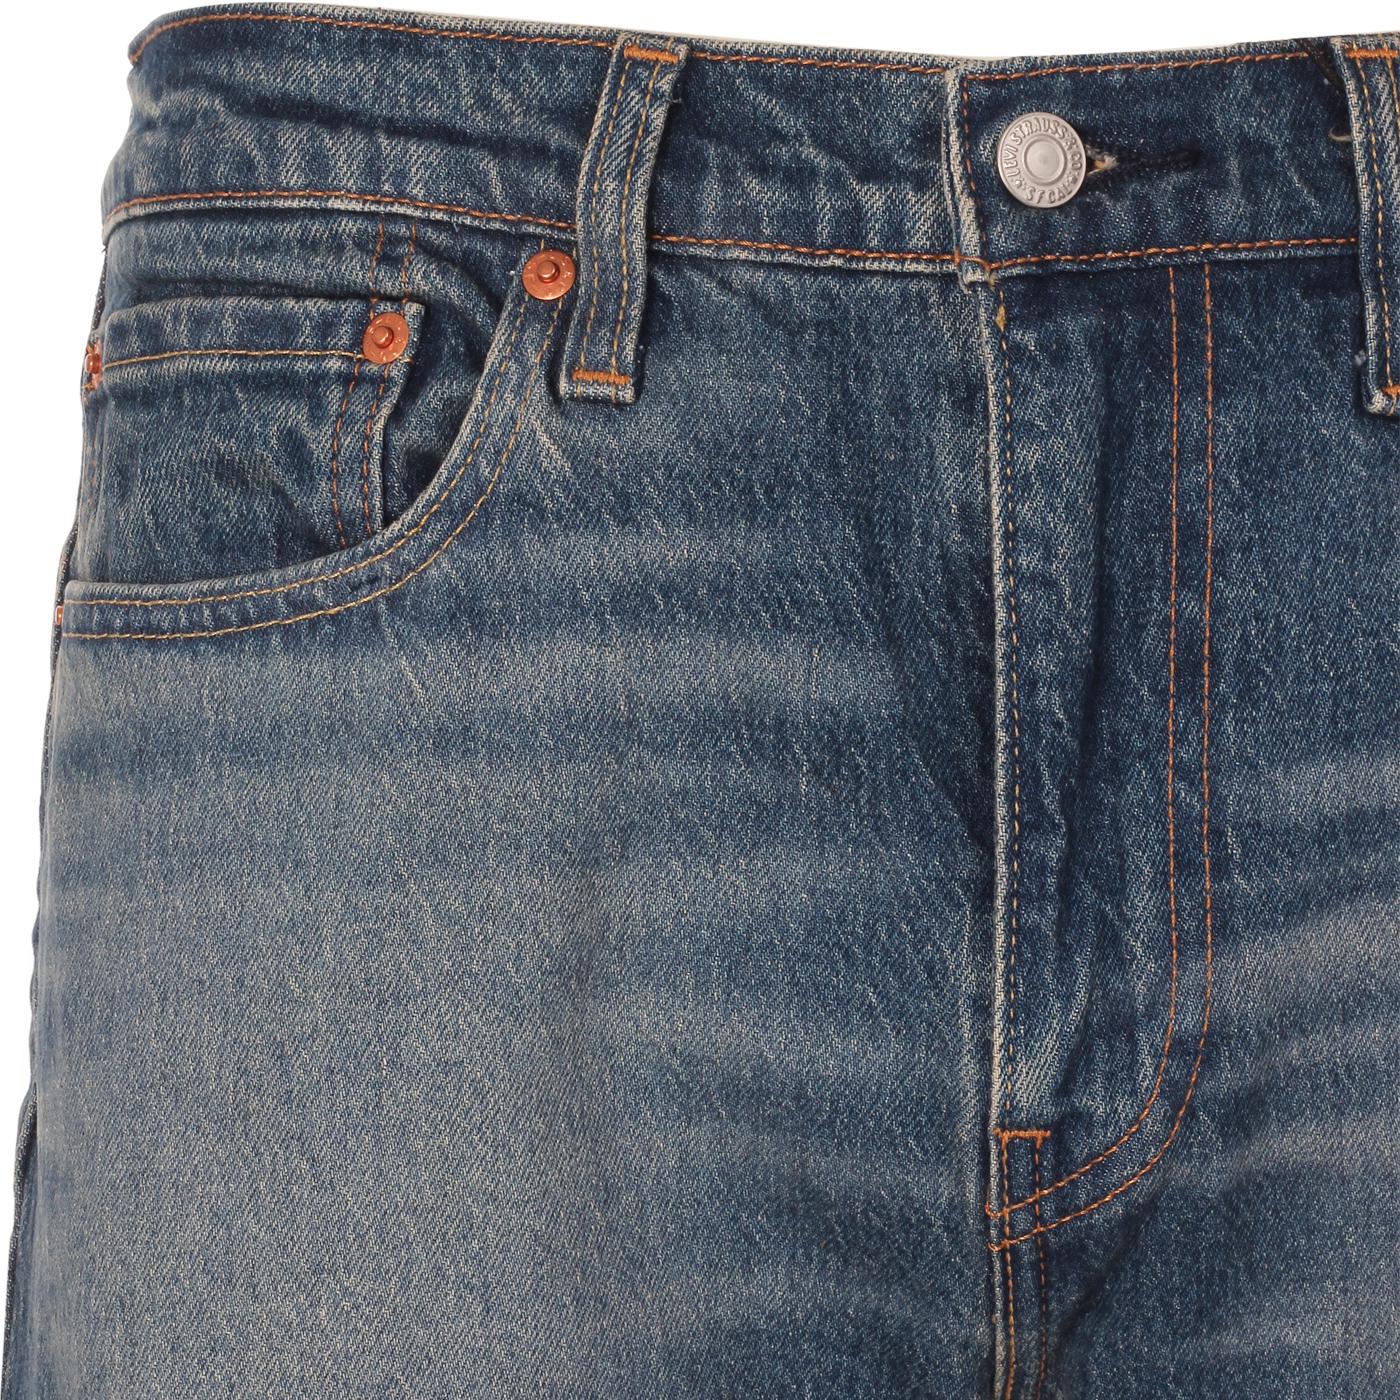 LEVI'S 527 Retro 70s Slim Boot Cut Jeans in Squash Train